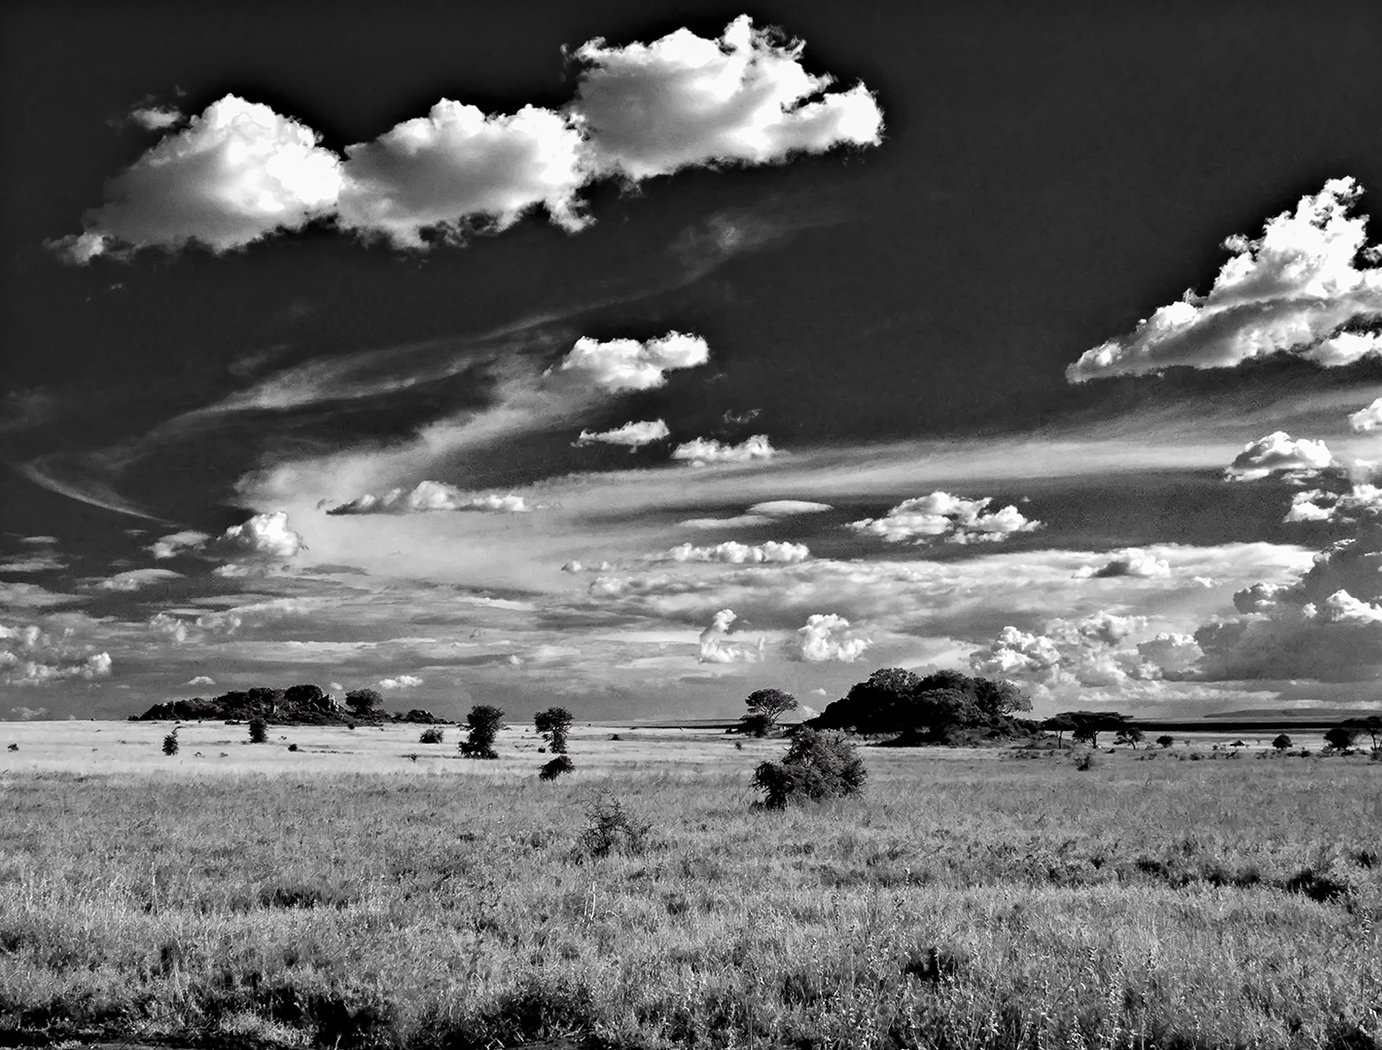 Serengeti, Tom Savage, Cowtown Camera Club, 1 HM